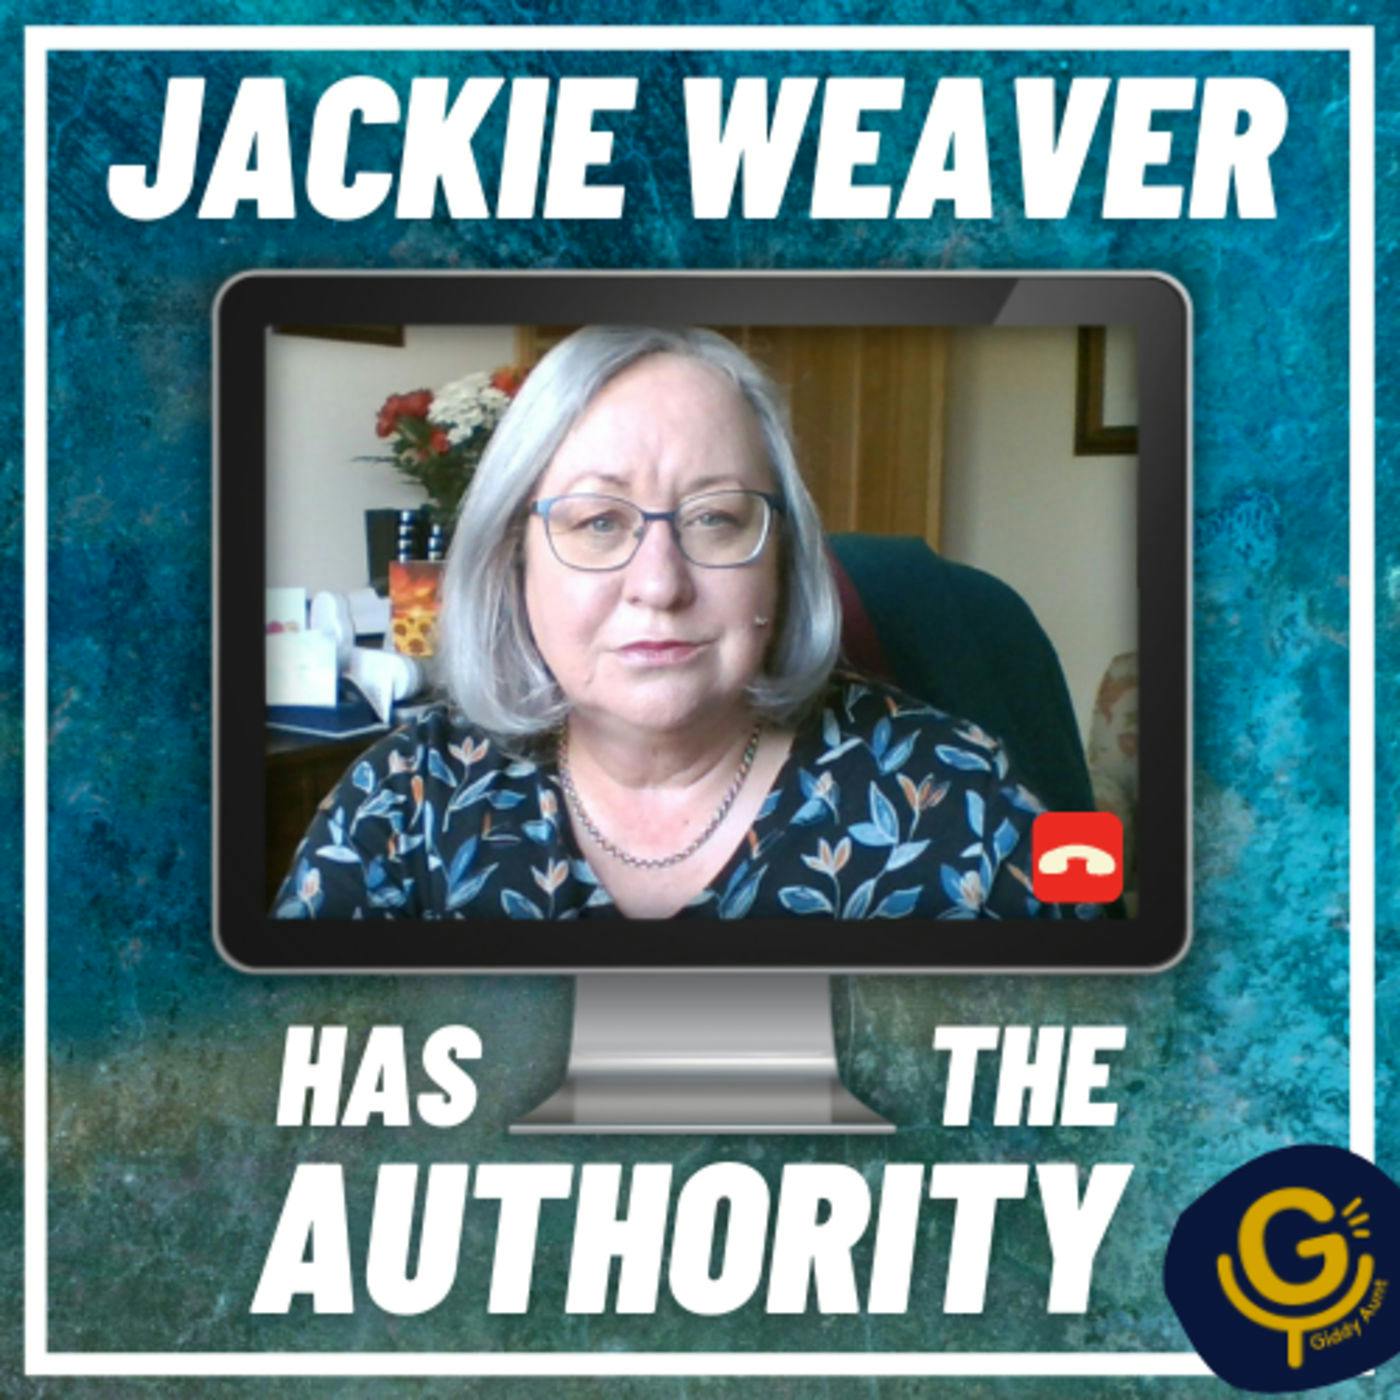 Jackie Weaver has the Authority